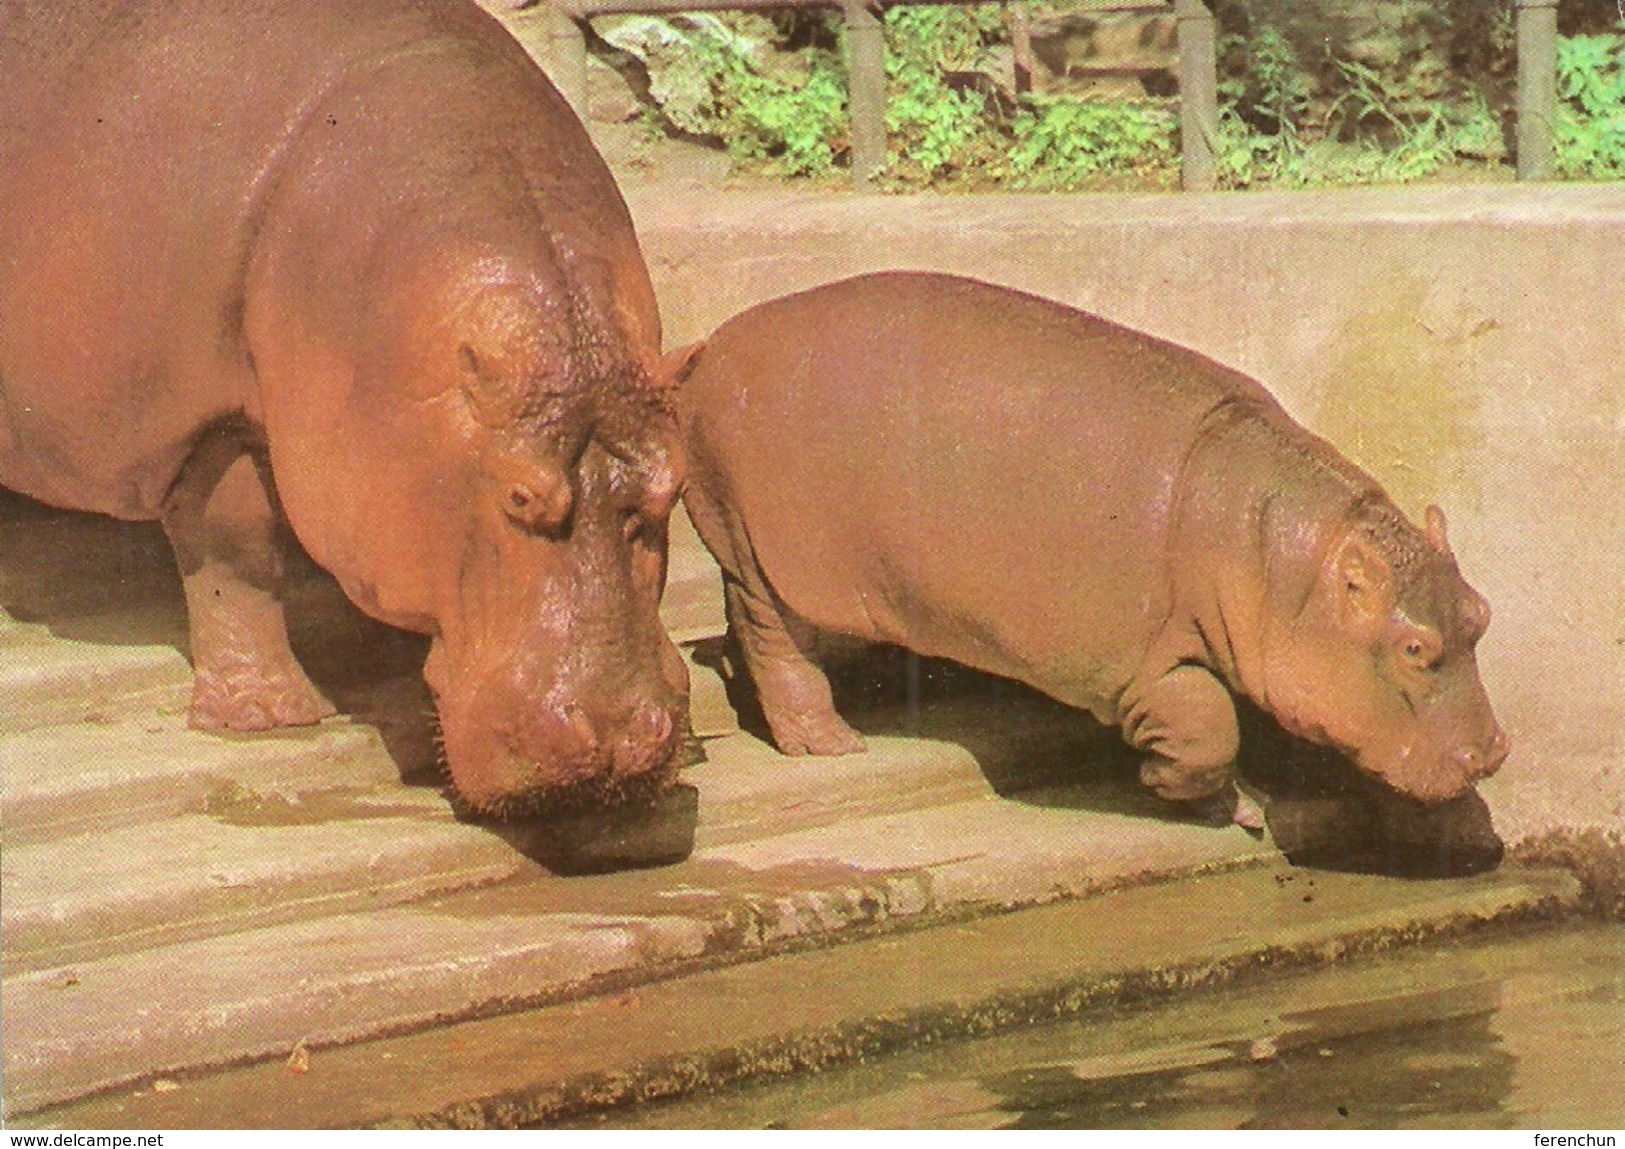 HIPPOPOTAMUS * BABY HIPPO * ANIMAL * ZOO & BOTANICAL GARDEN * BUDAPEST * KAK 0028 722 * Hungary - Hippopotames